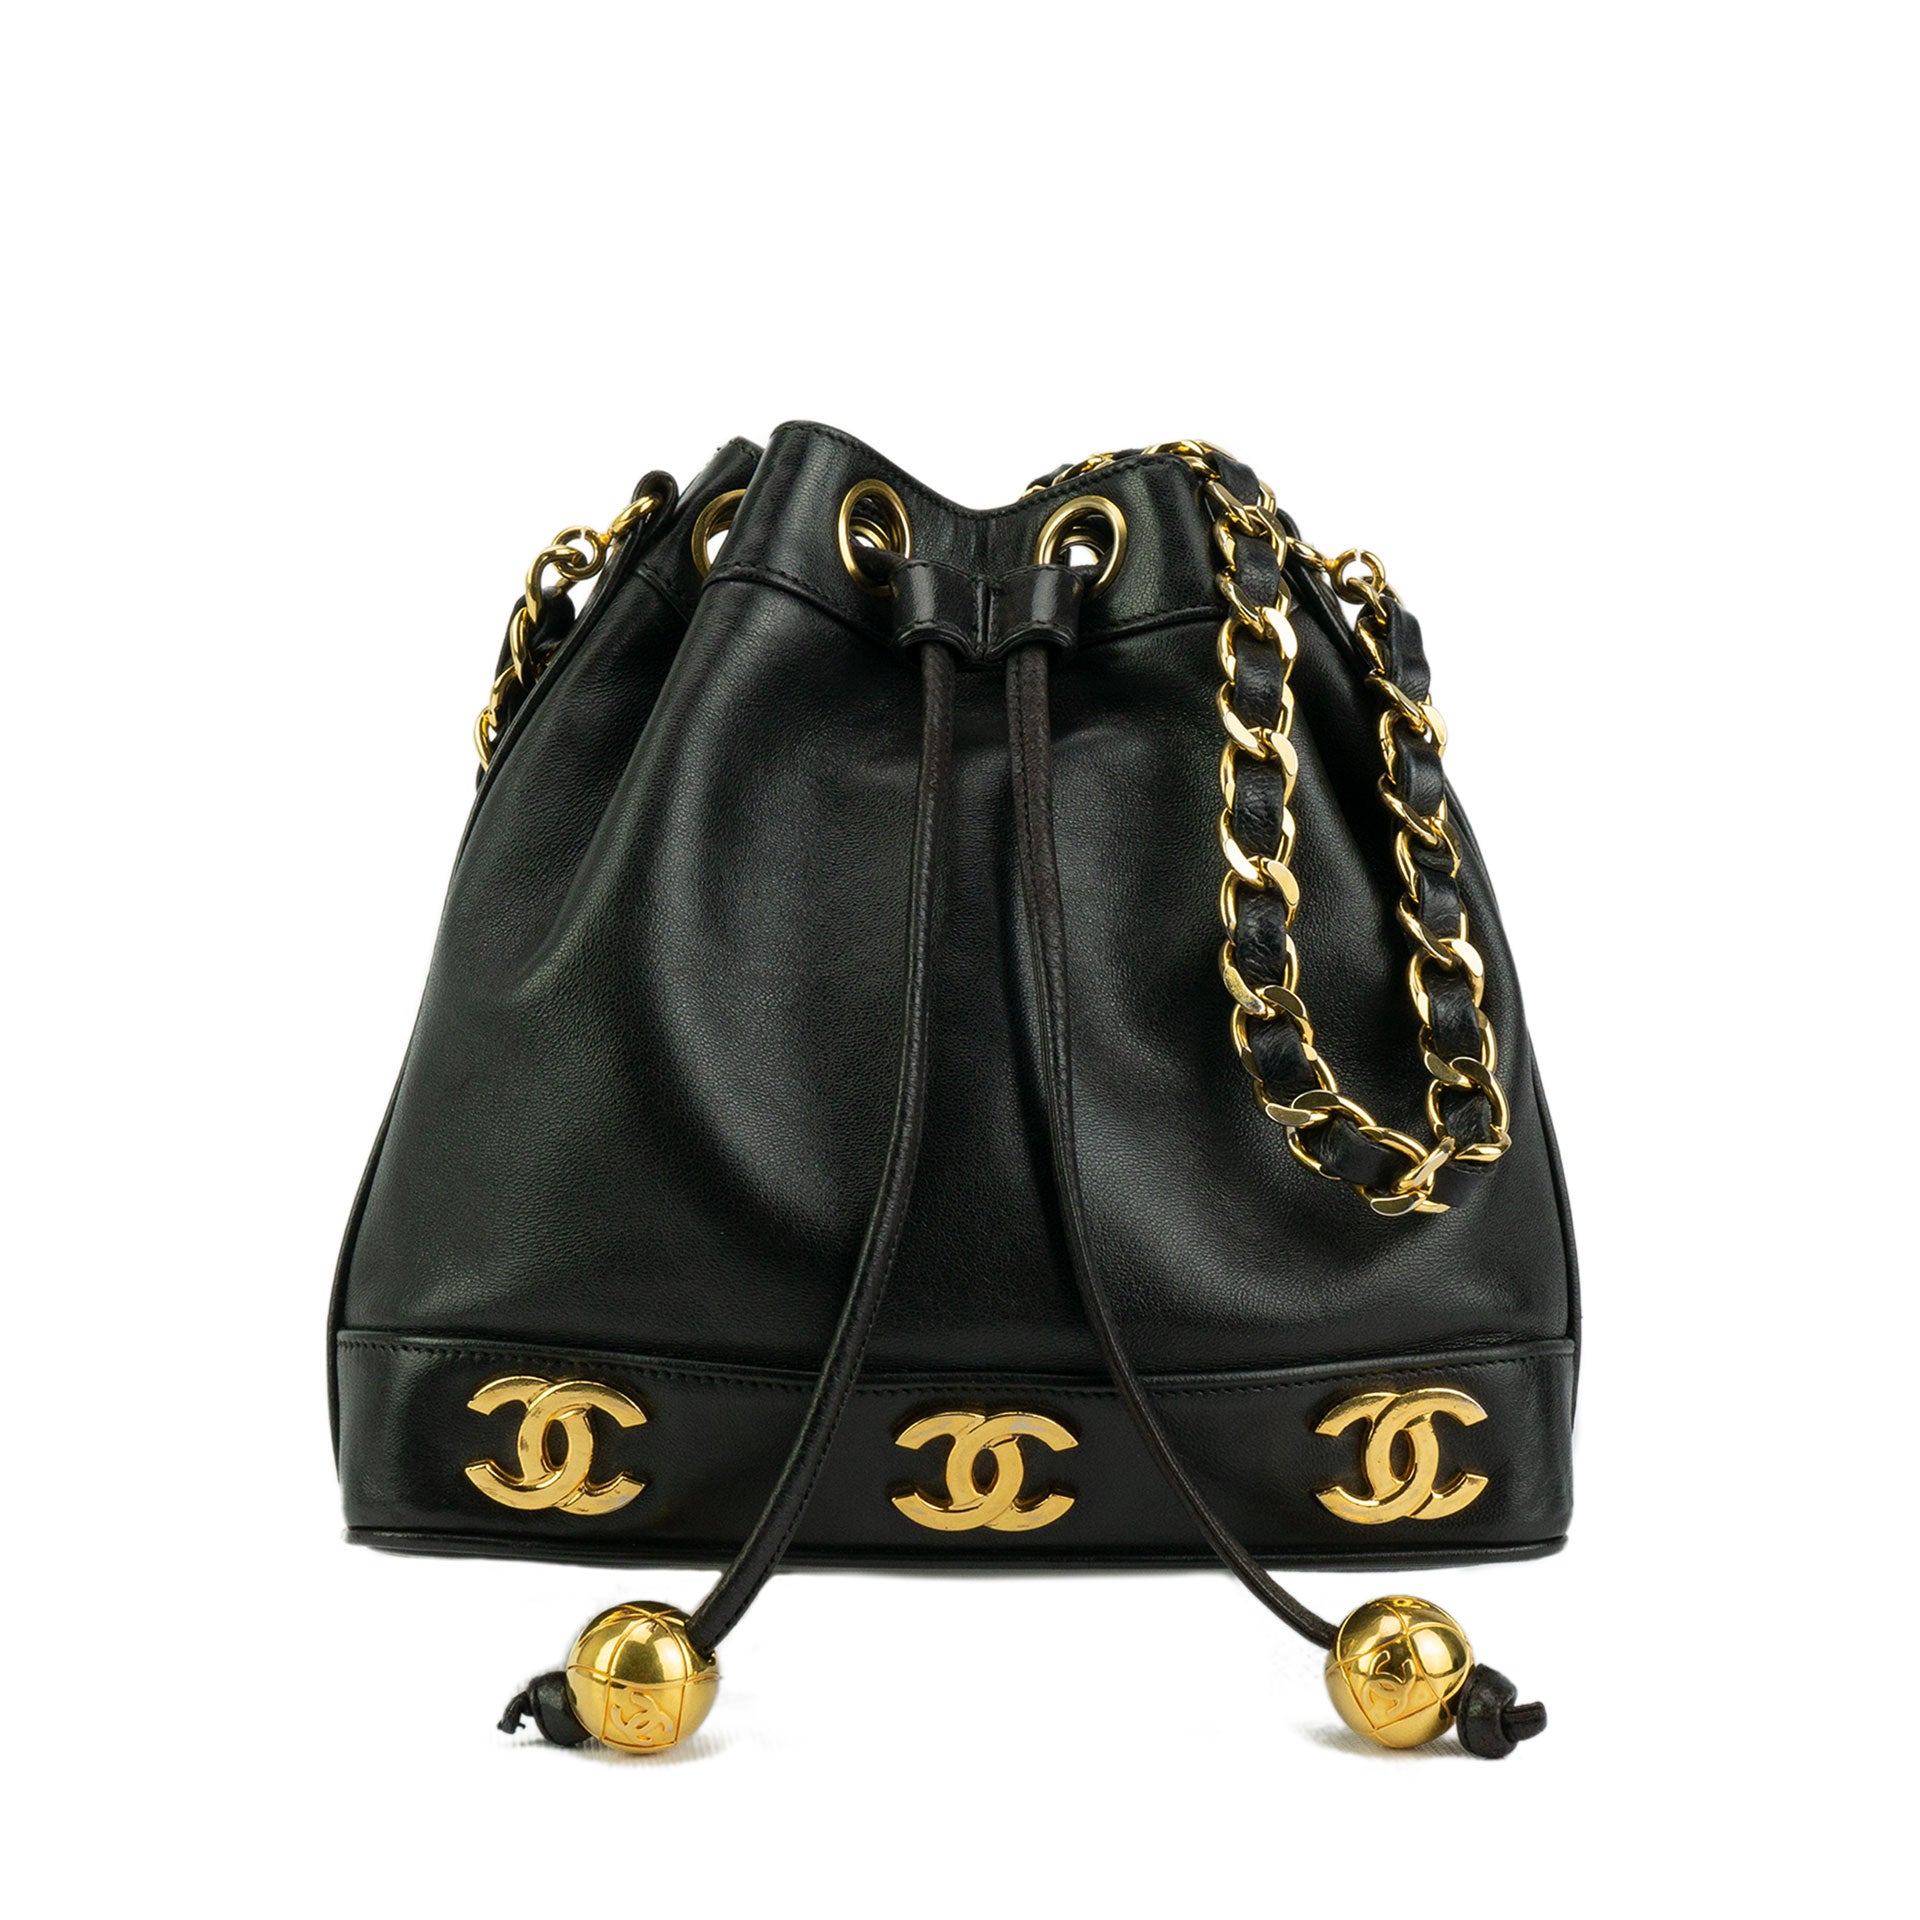 Chanel Vintage Rare Black Lambskin XL CC Mini Flap Bag